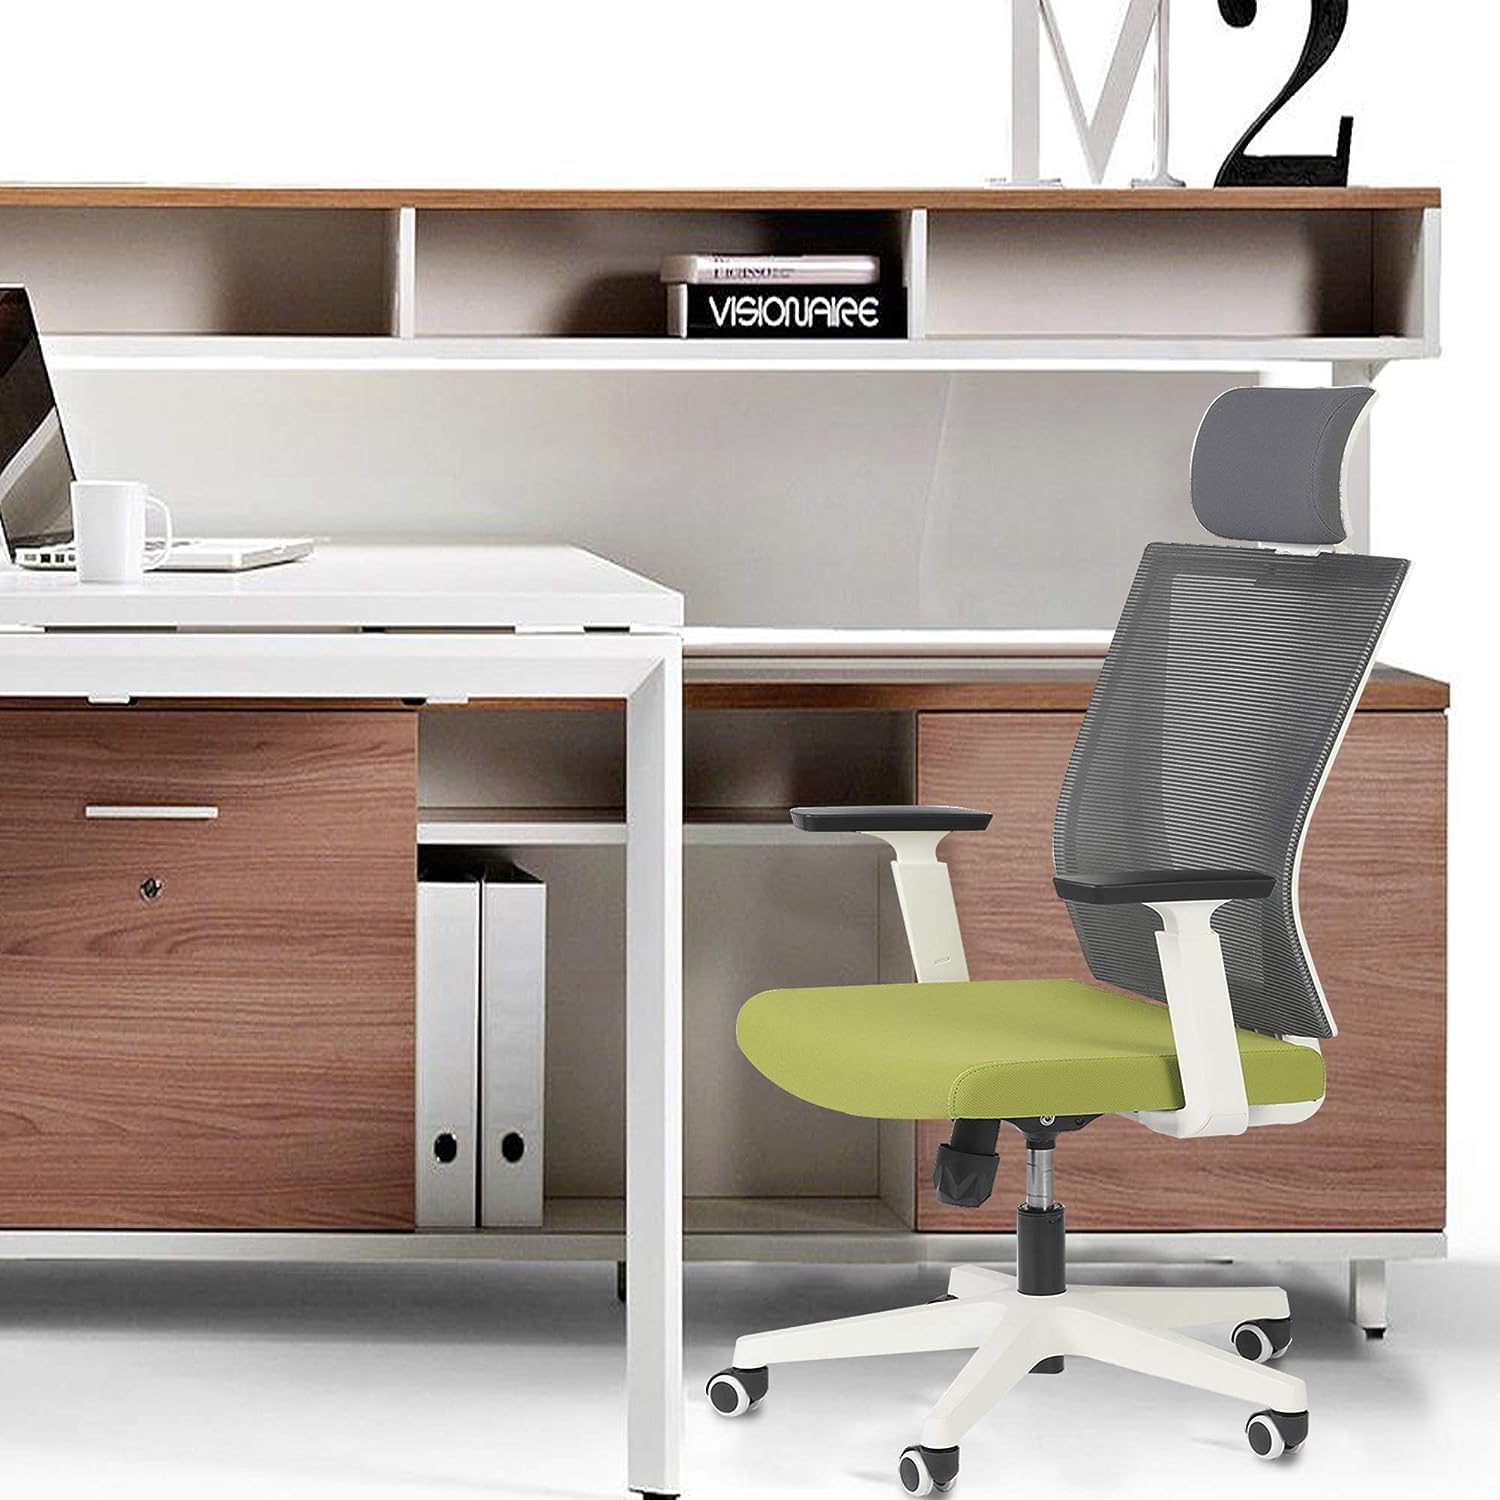 LUCKYERMORE Adjustable Office Mesh Chairs Ergonomic Desk Chairs with Lumbar Support Armrest Headrest, High Back